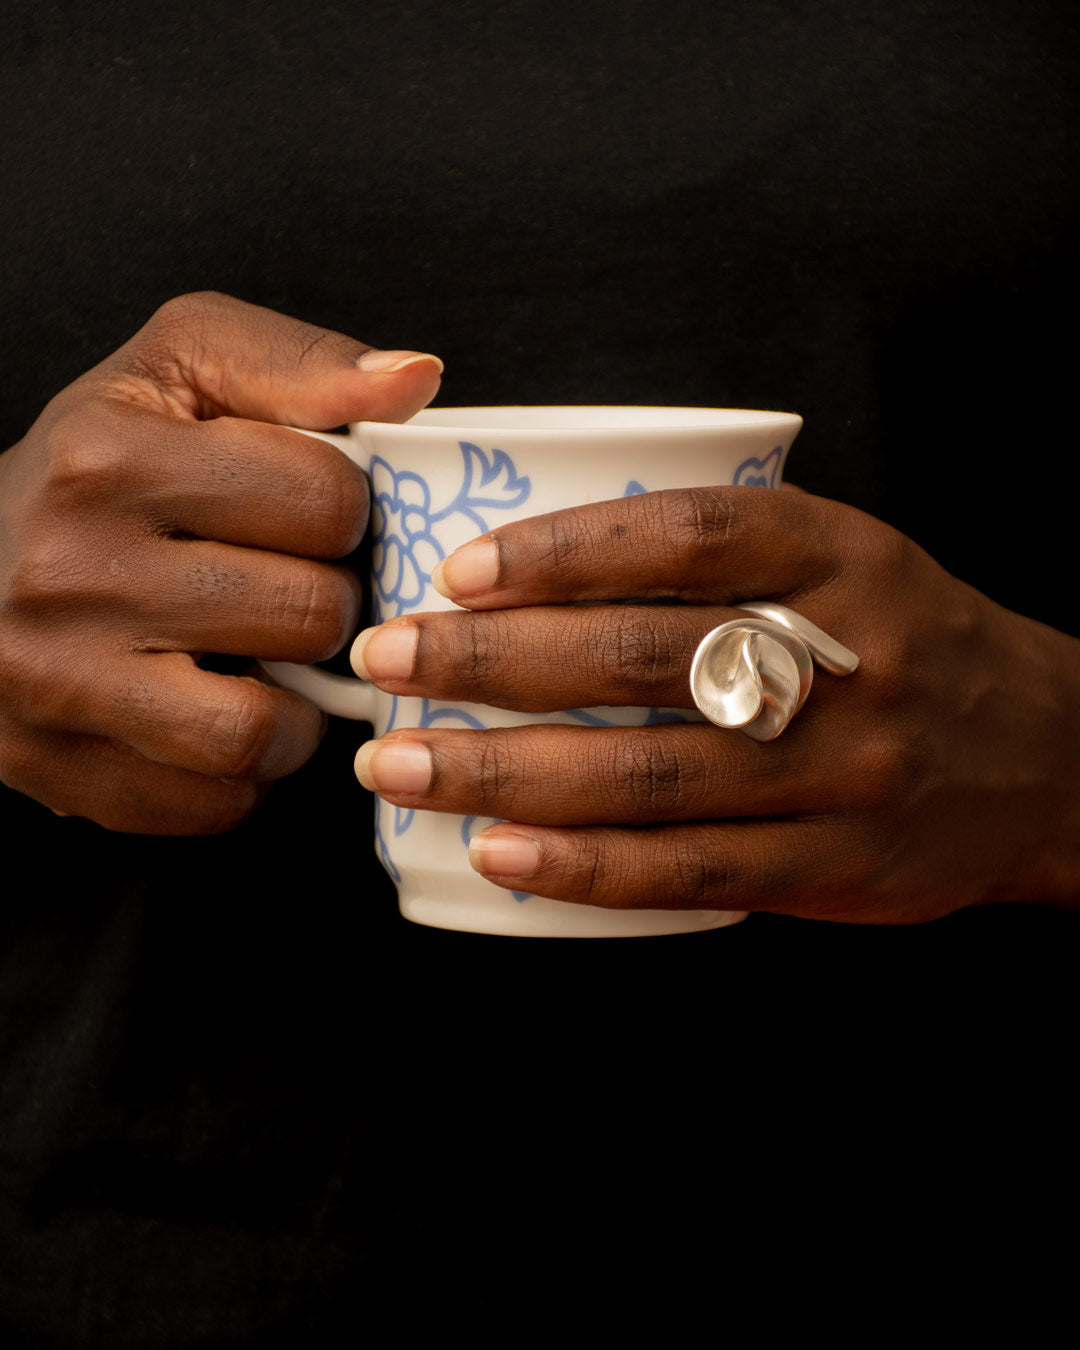 Handmade silver ring - Tabitha Sowden